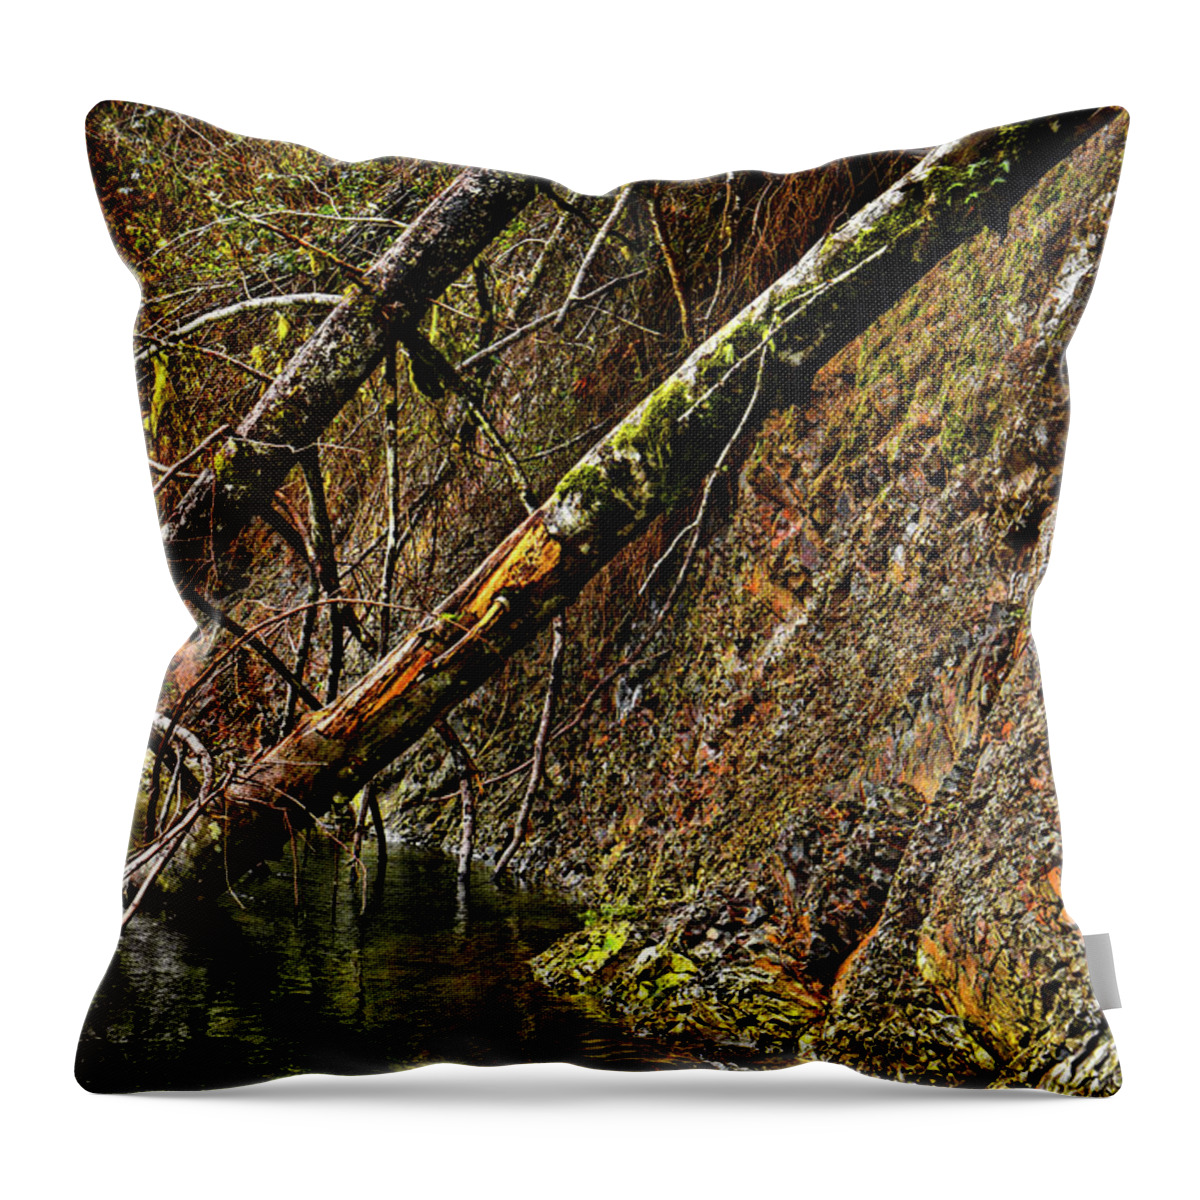 Riverscape Throw Pillow featuring the photograph Fallen Friends 2 by Jason Brooks